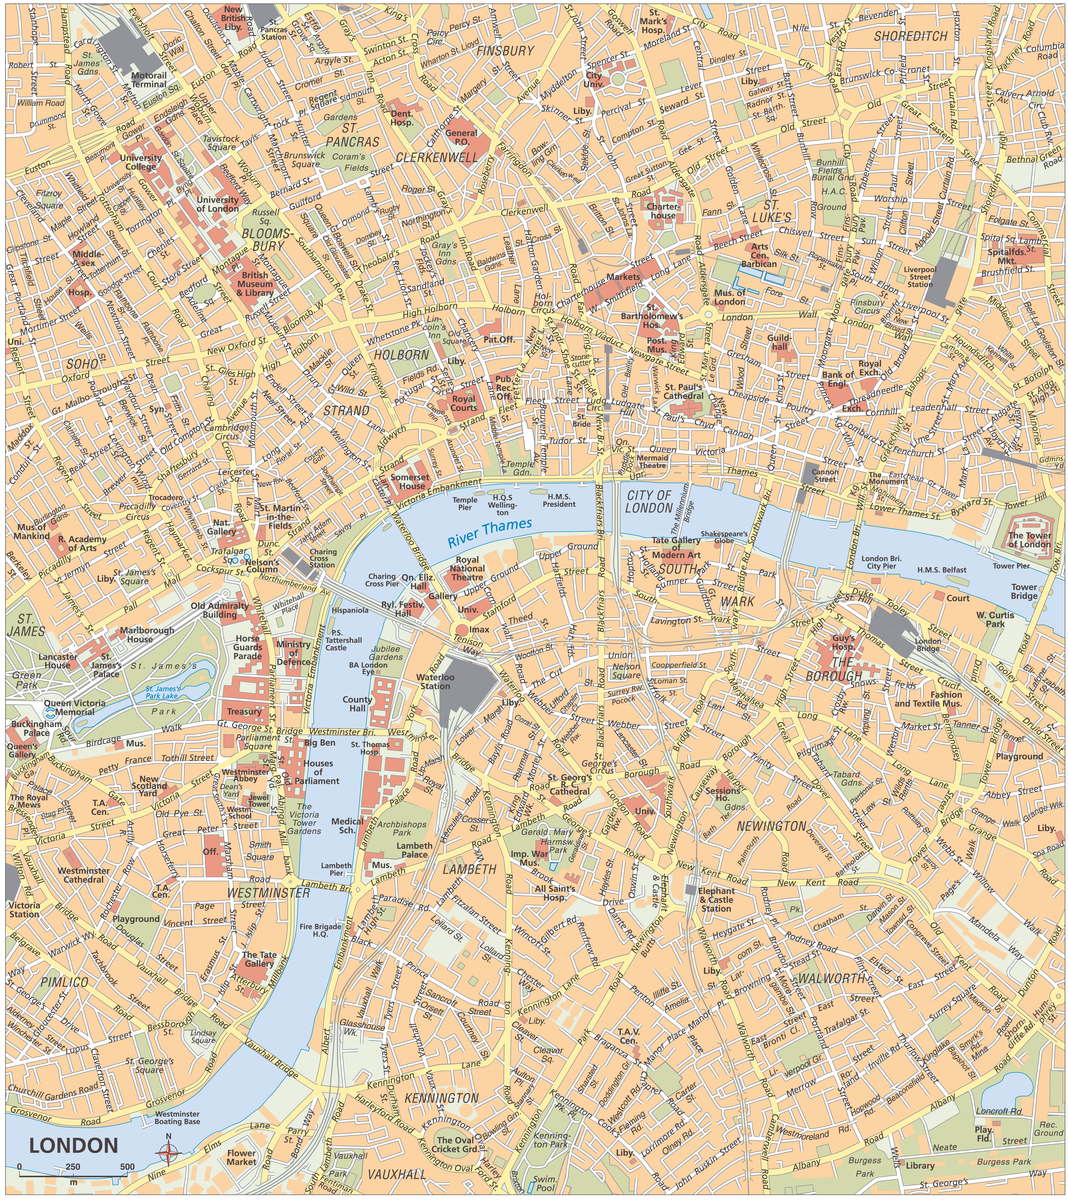 London (kart)